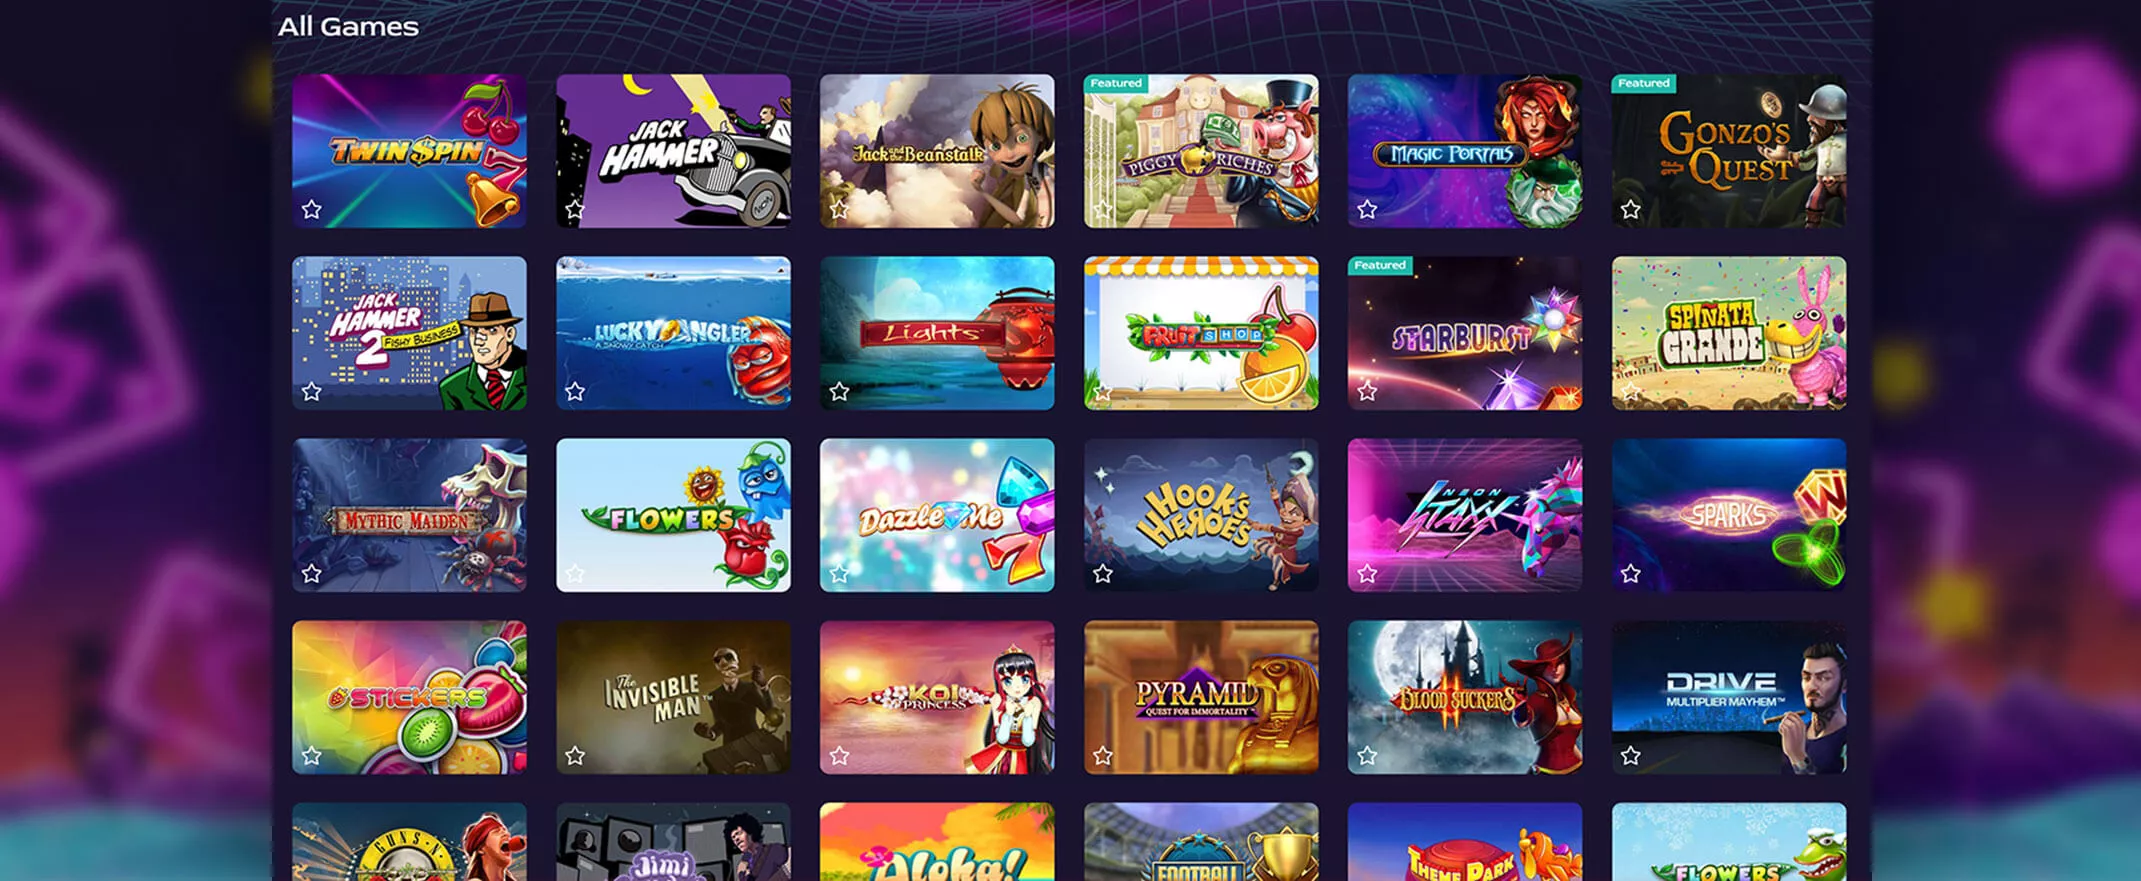 Ocean Breeze Casino review screenshot of the games